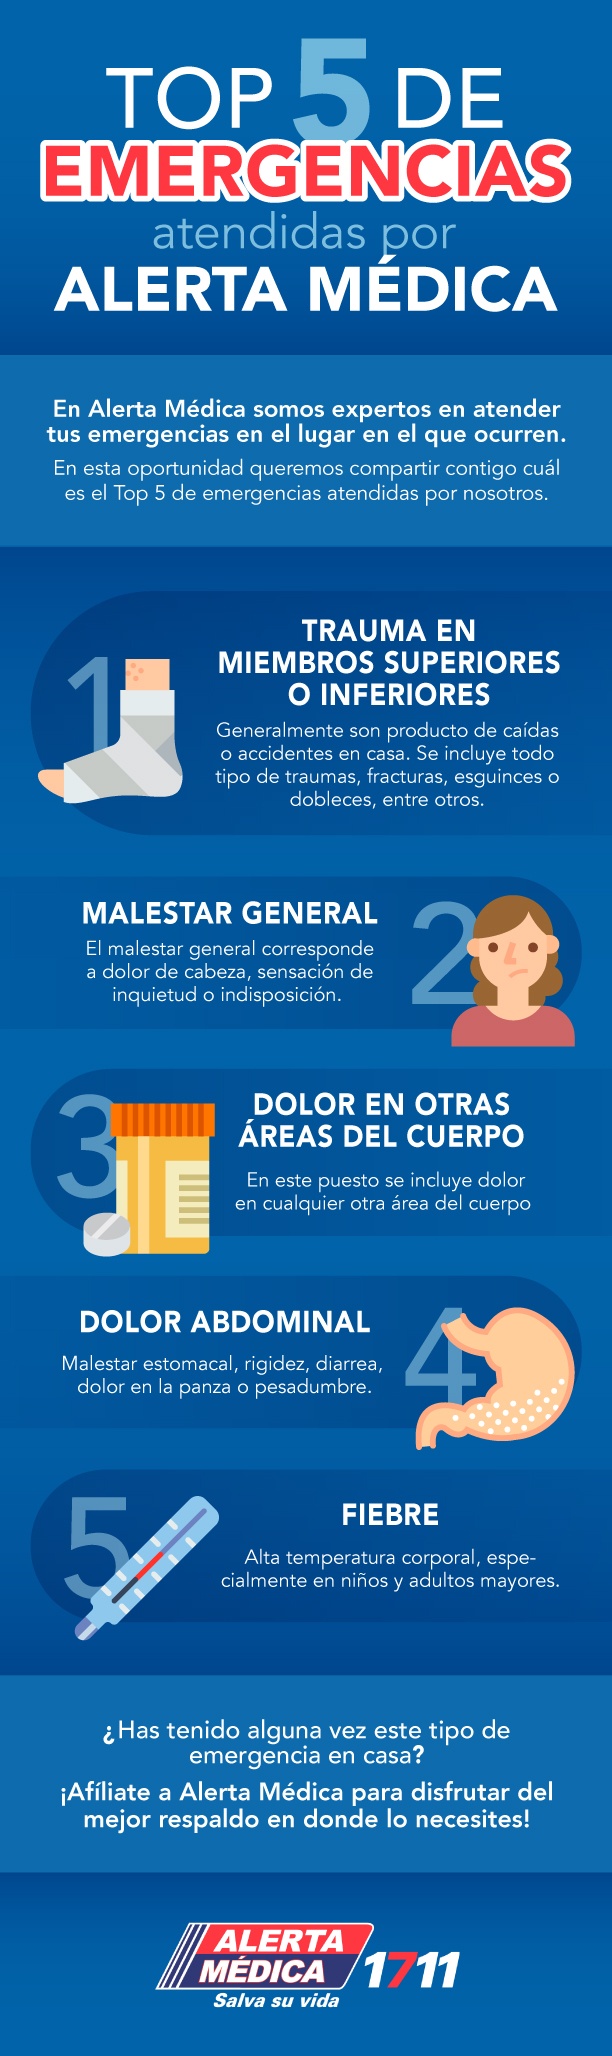 Alerta-Médica-top5emergencias-completa